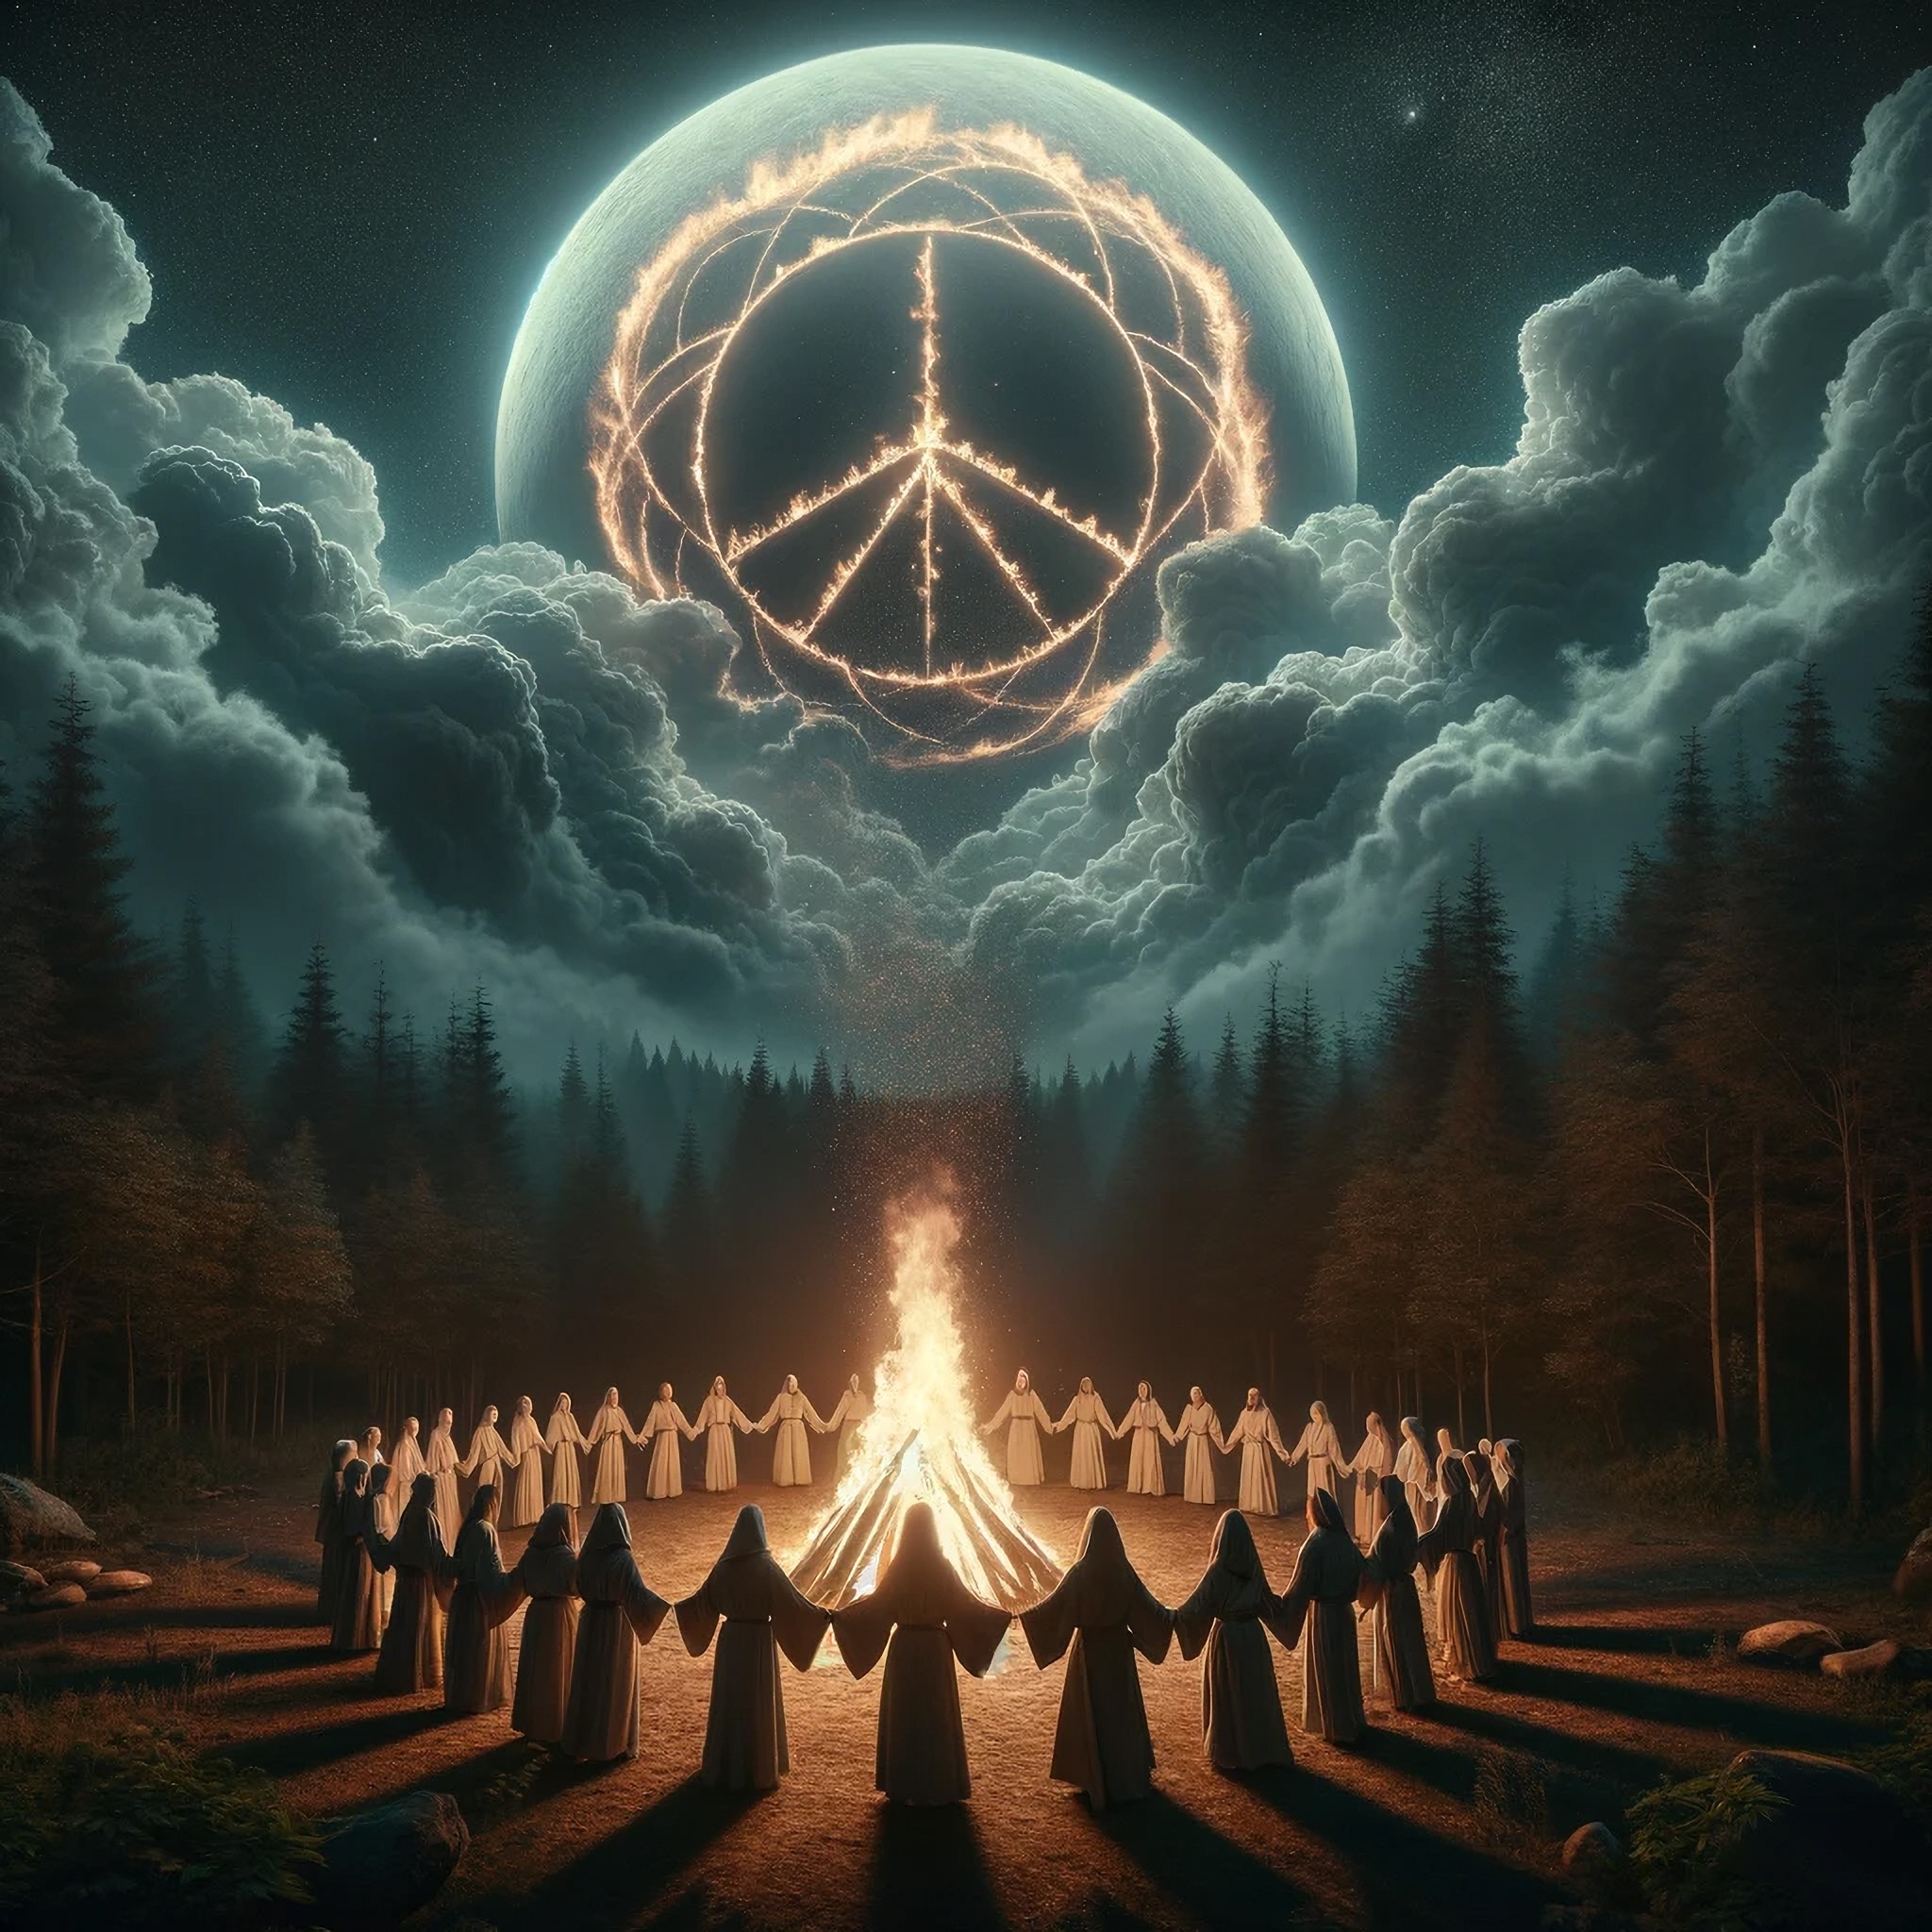 The Missing Peace “FIREWORK” single artwork